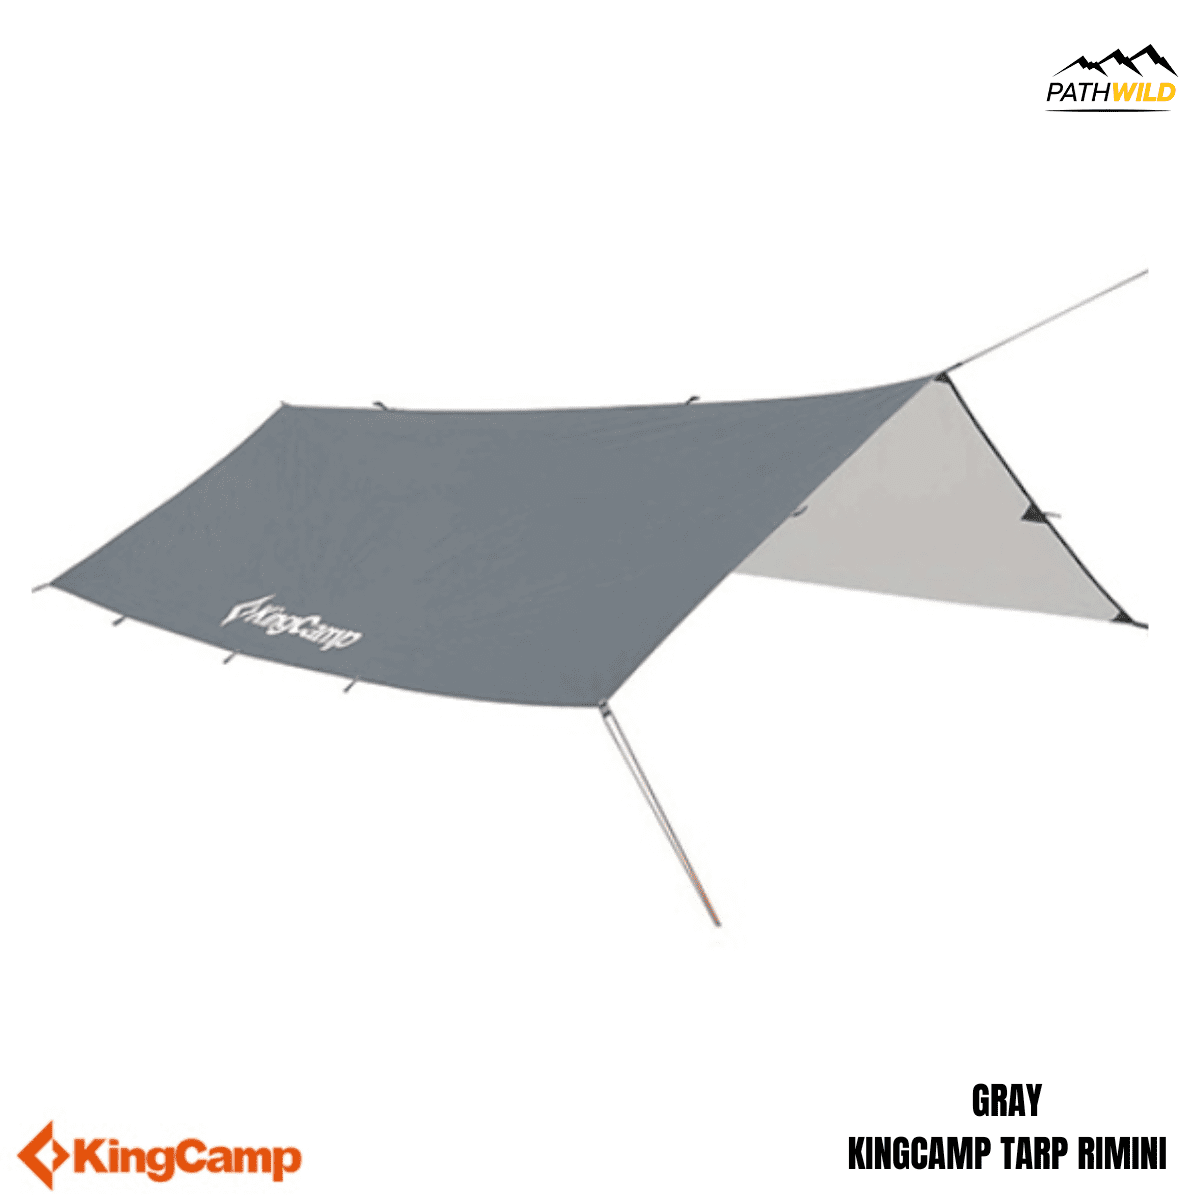 KINGCAMP TARP RIMINI ทาร์ป ฟลายชีต ผ้าใบกันฝน Fly sheet tarp